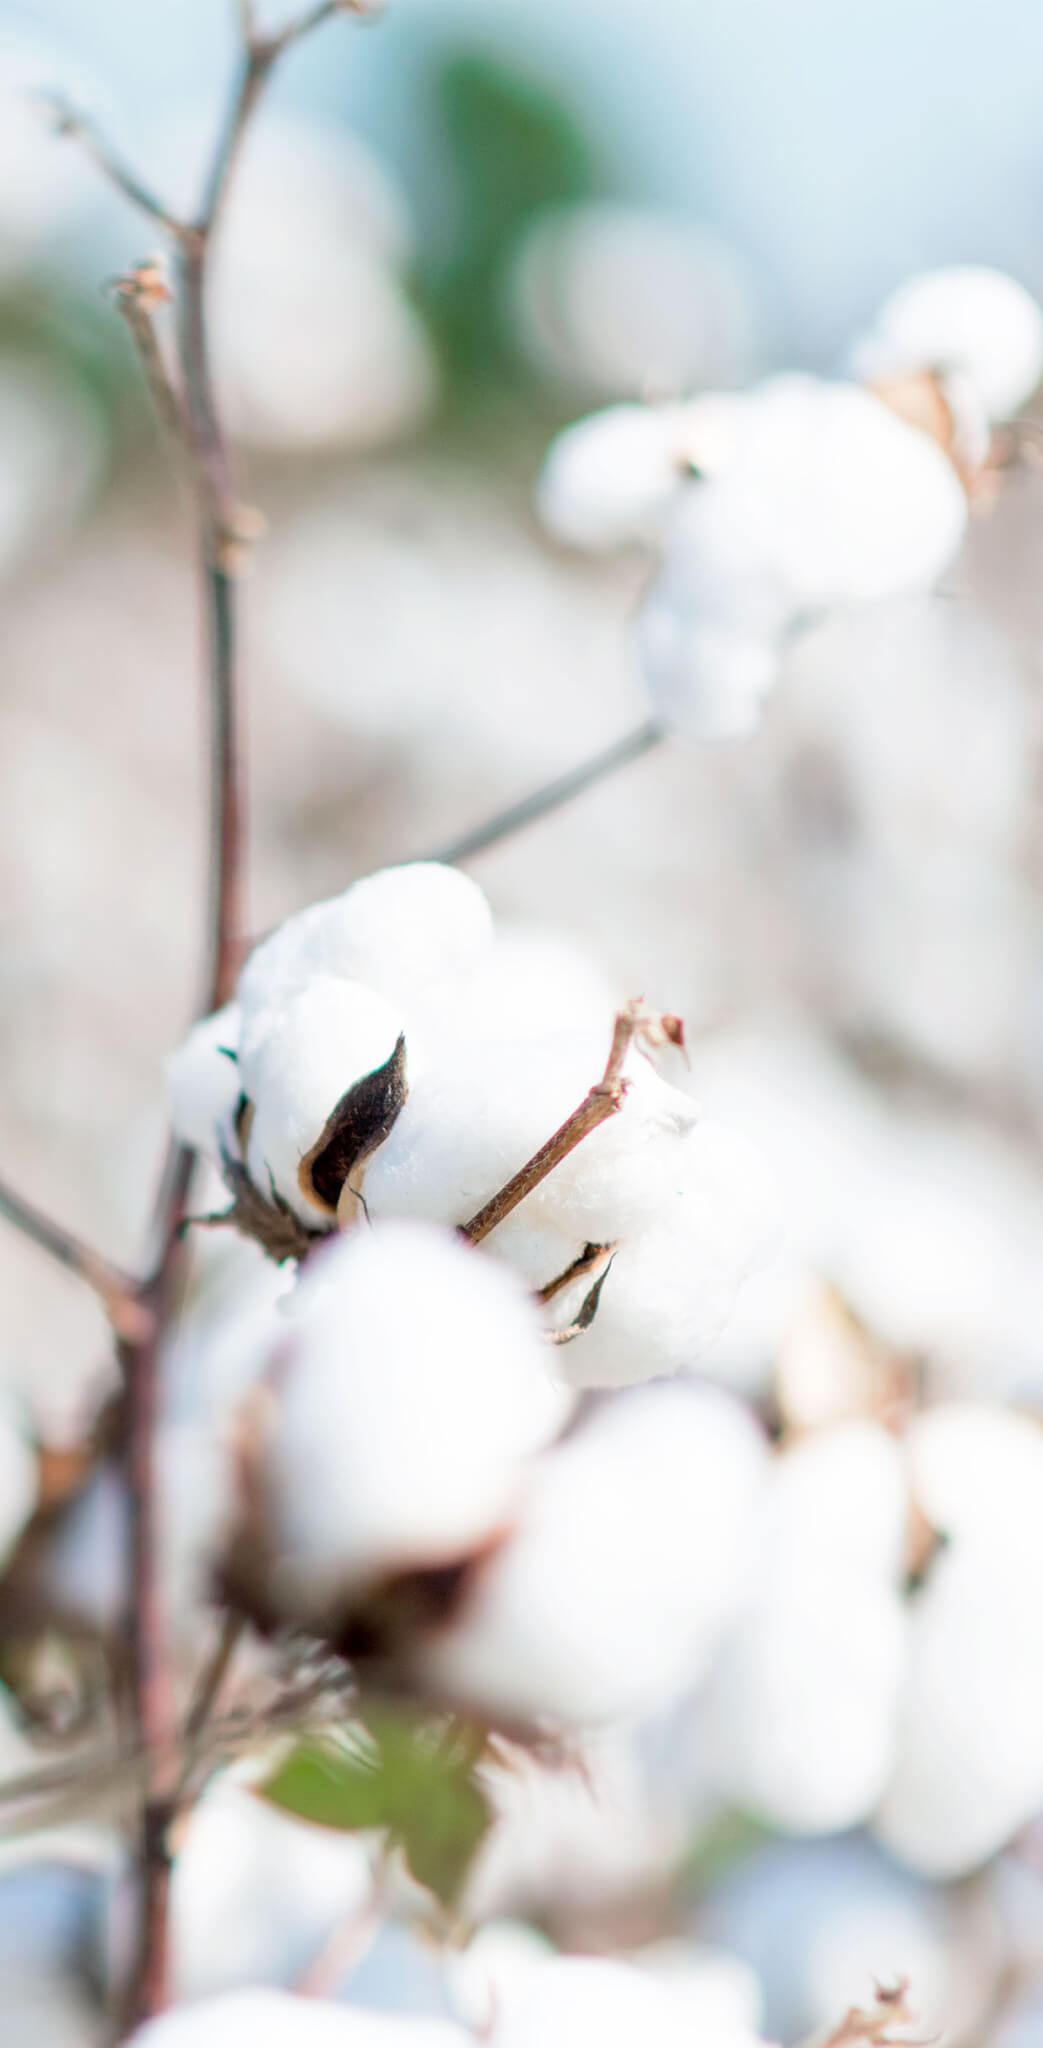 Cotton plant in field